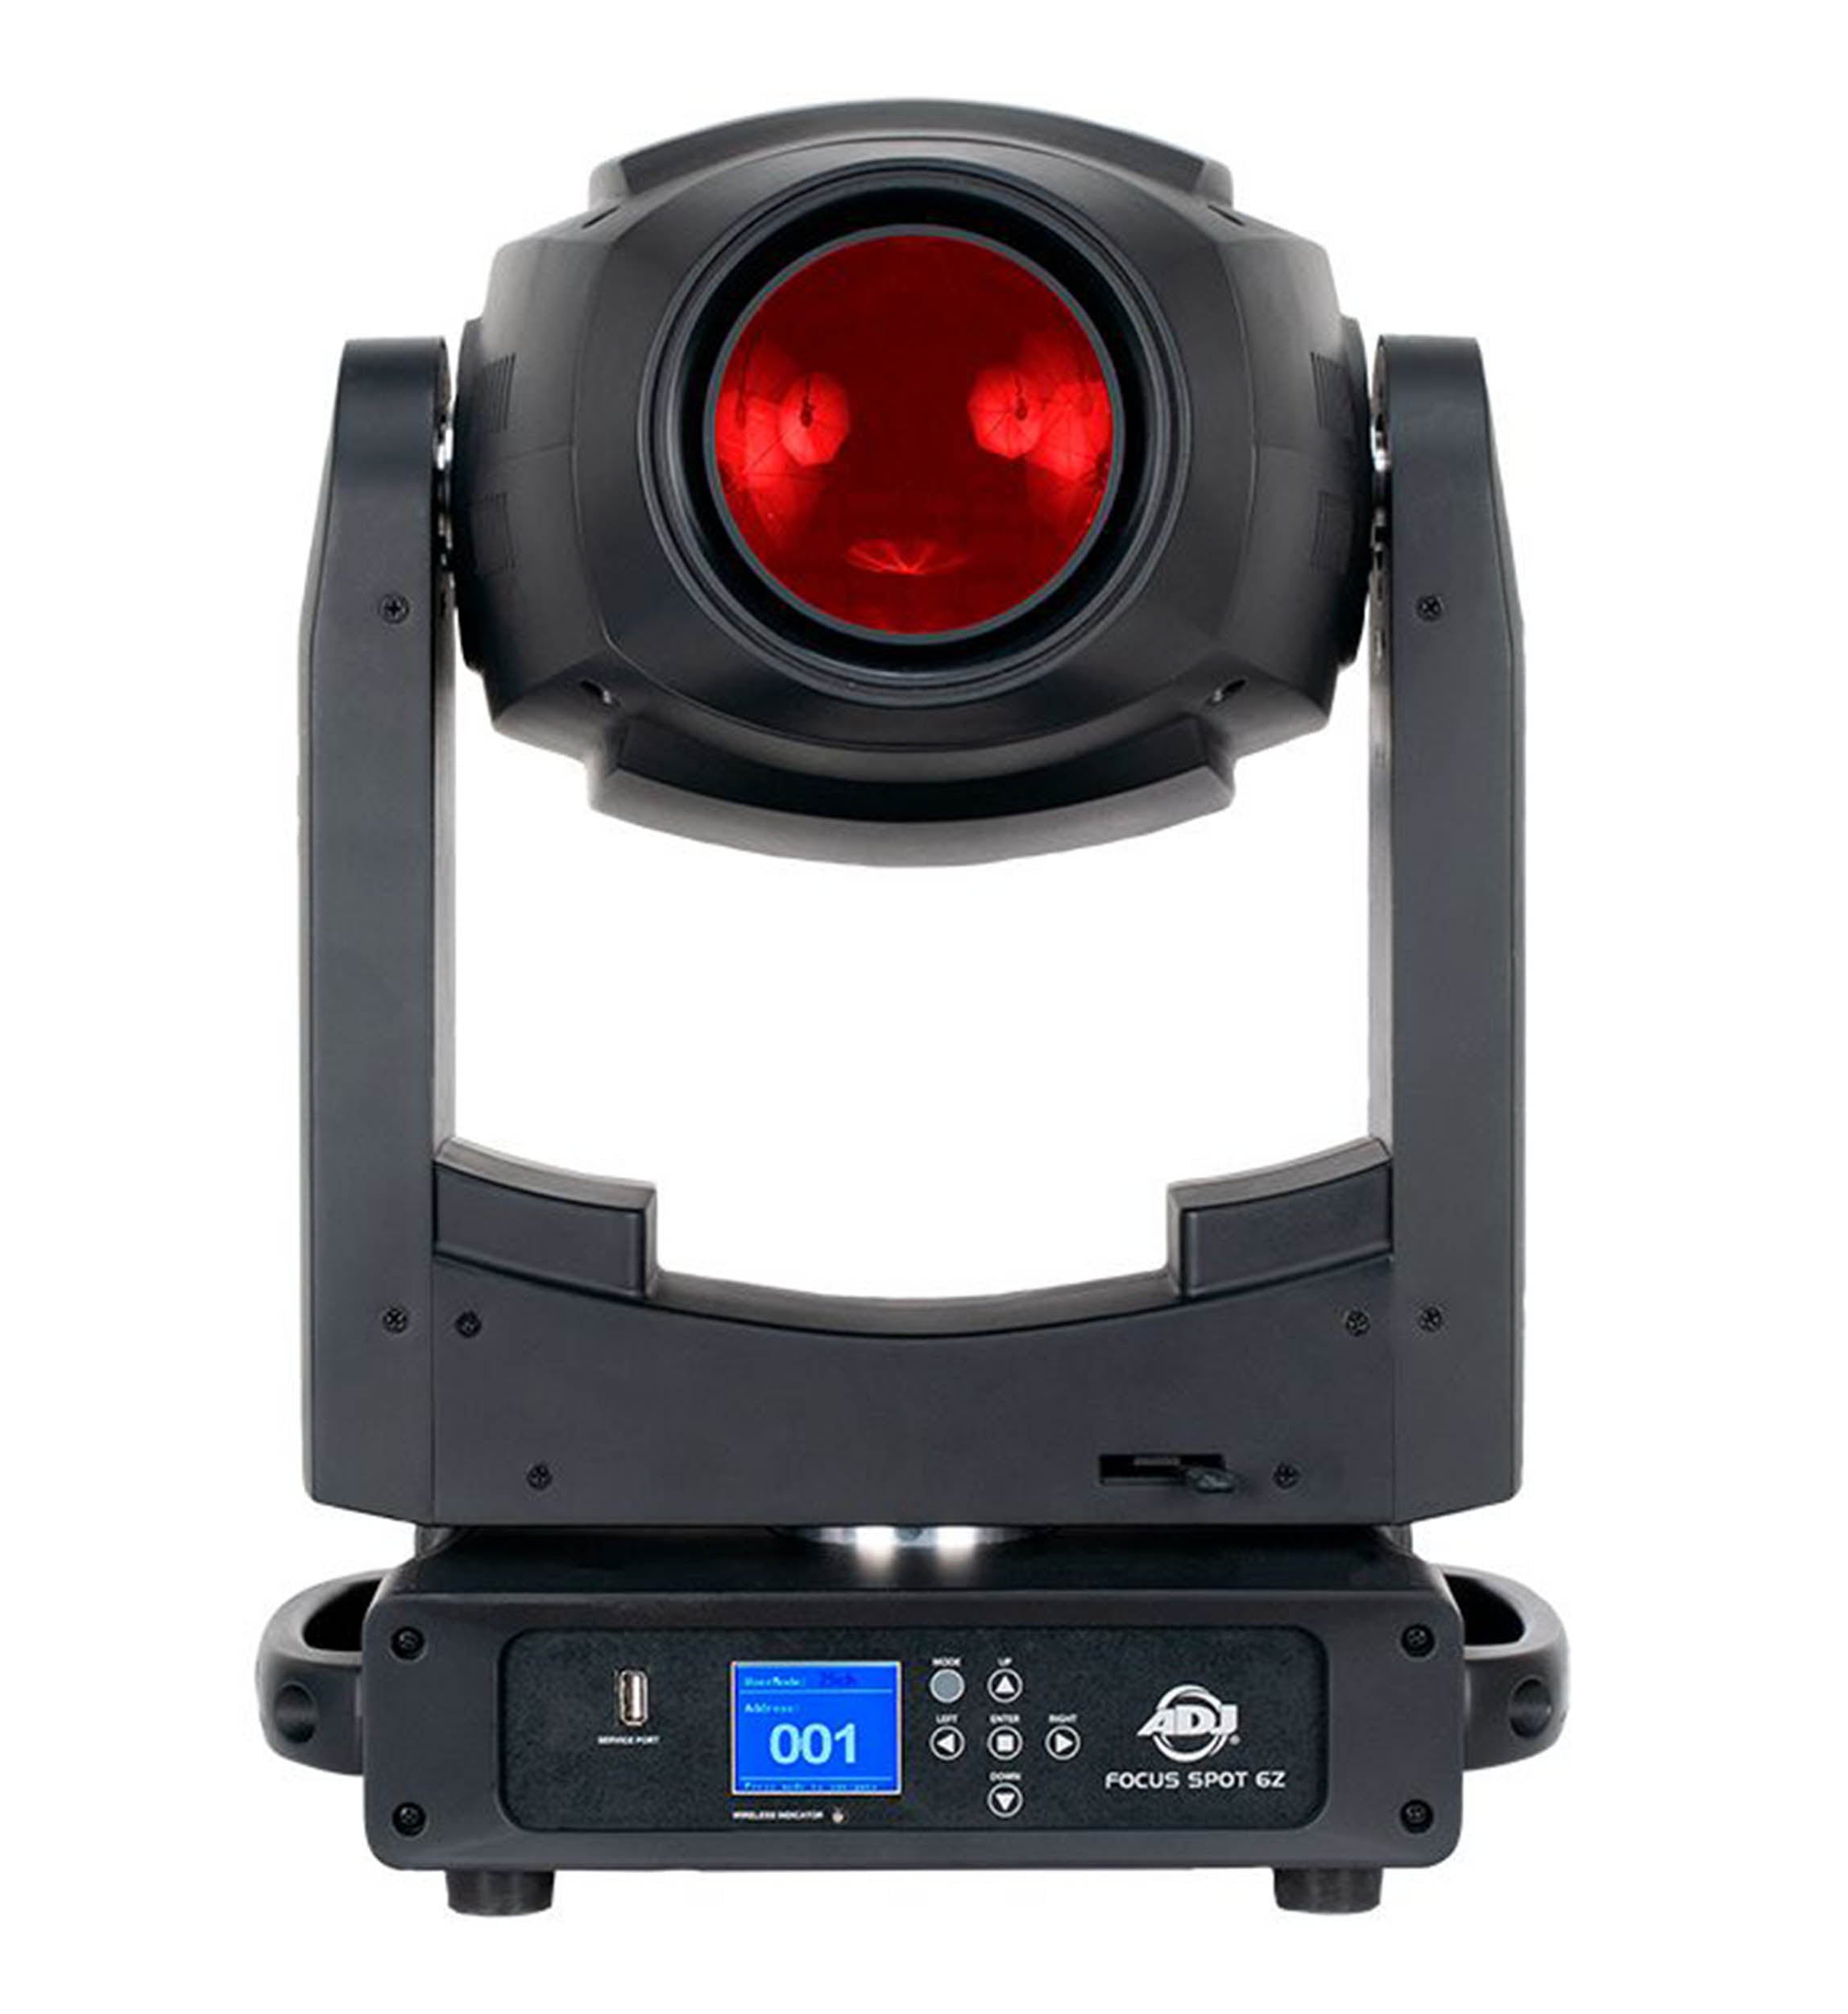 ADJ FOCUS SPOT 6Z, 300-Watt LED Moving Head with Motorized Focus and Zoom by ADJ